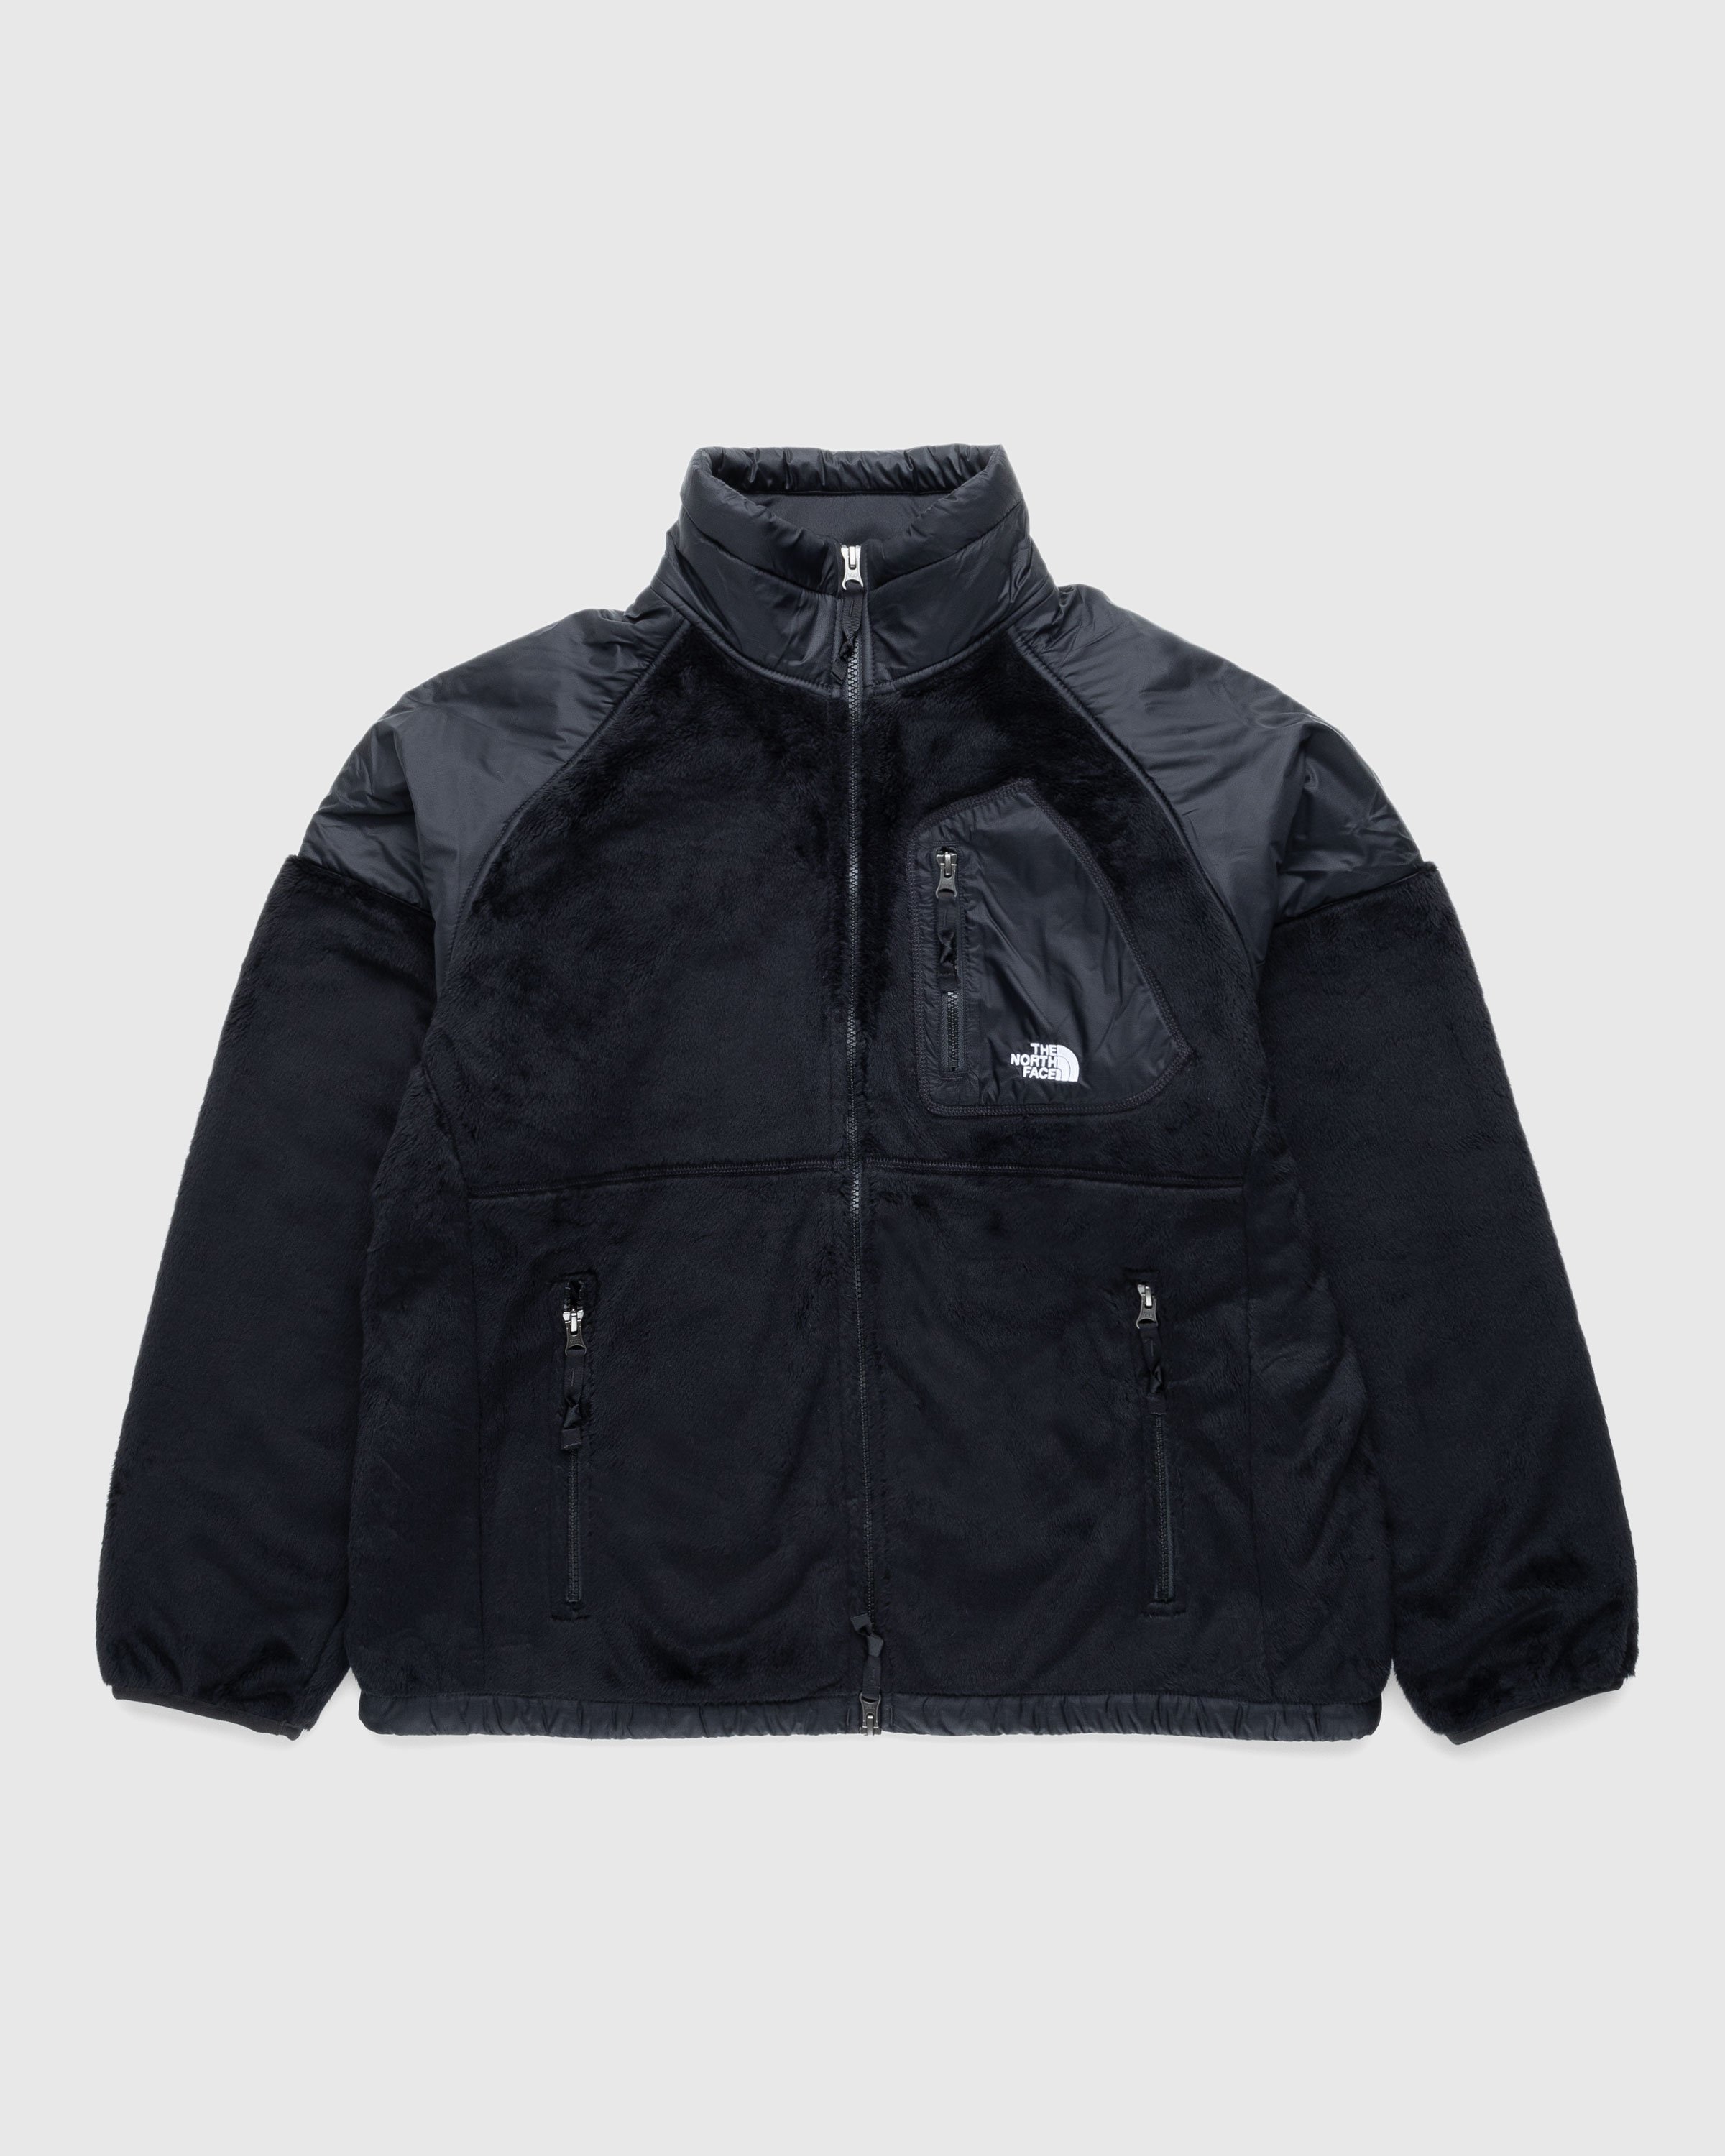 The North Face - Versa Velour Jacket Black - Clothing - Black - Image 1